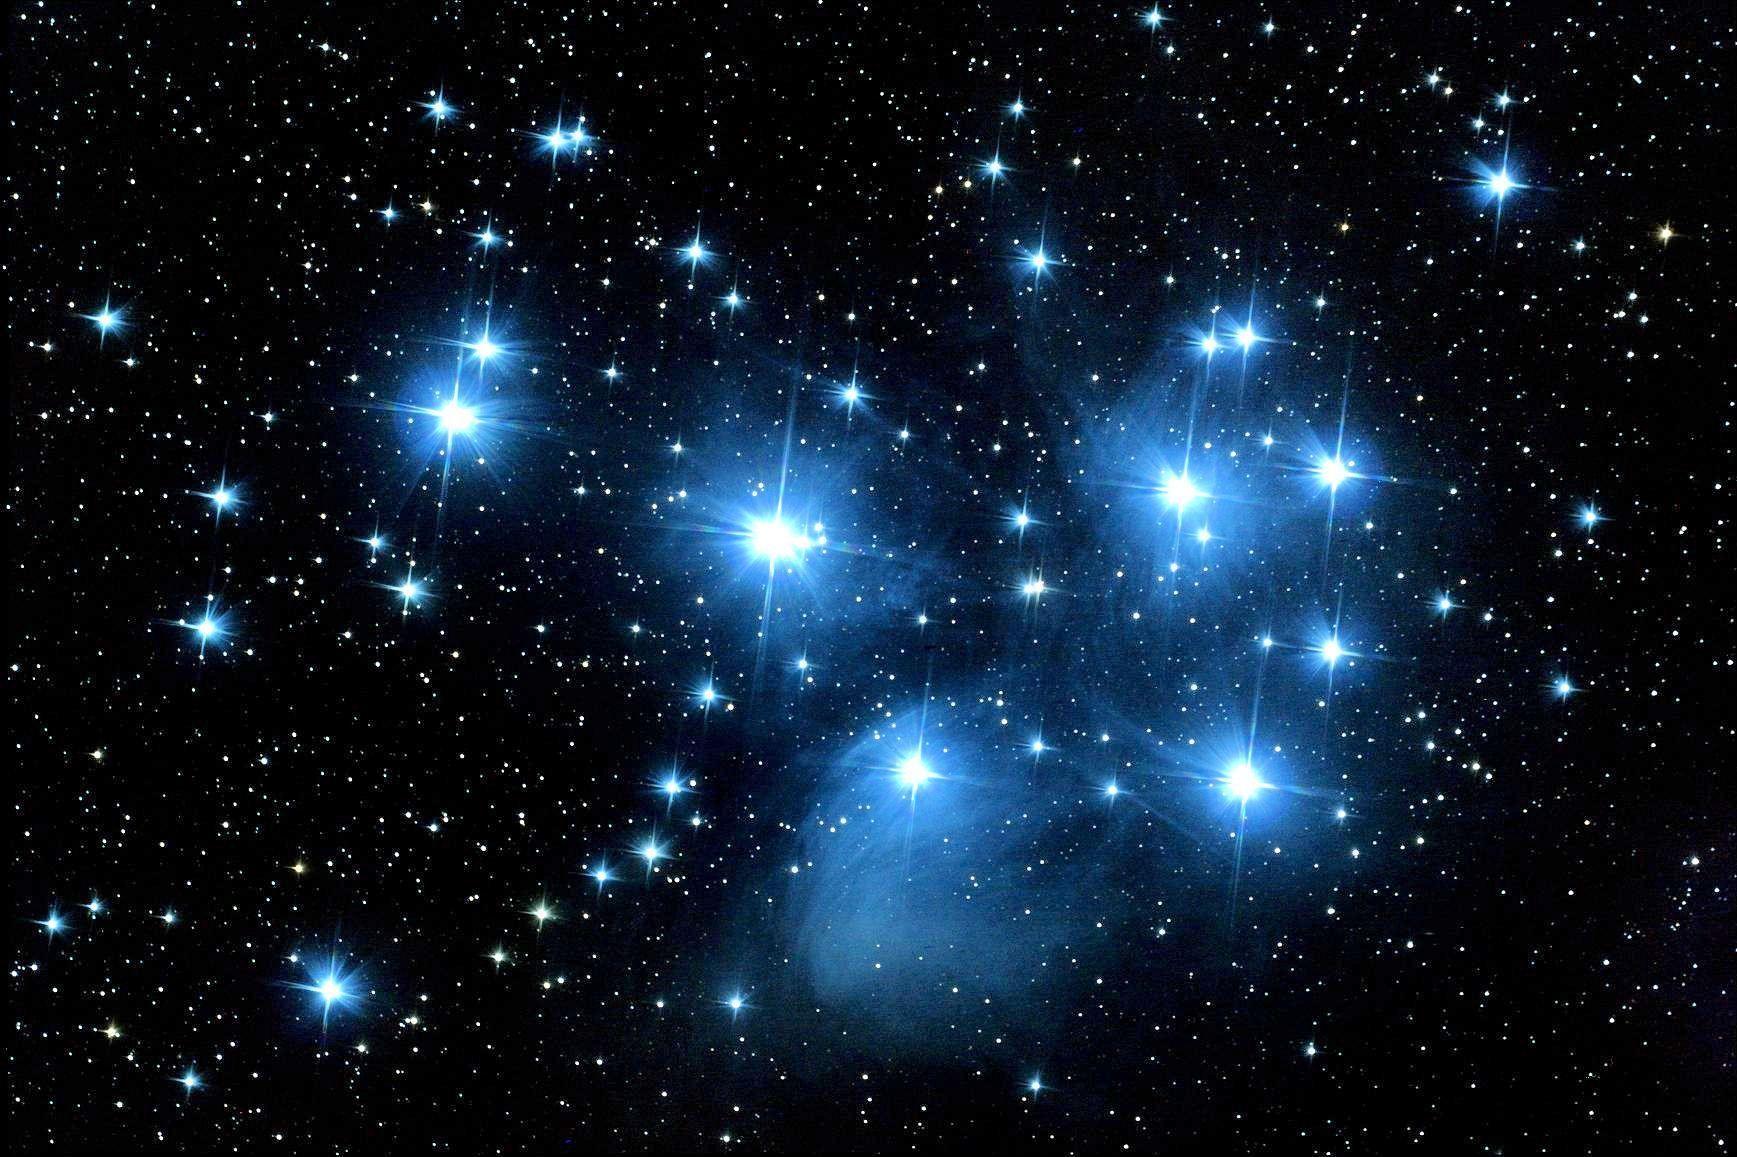 Pleiades Hubble